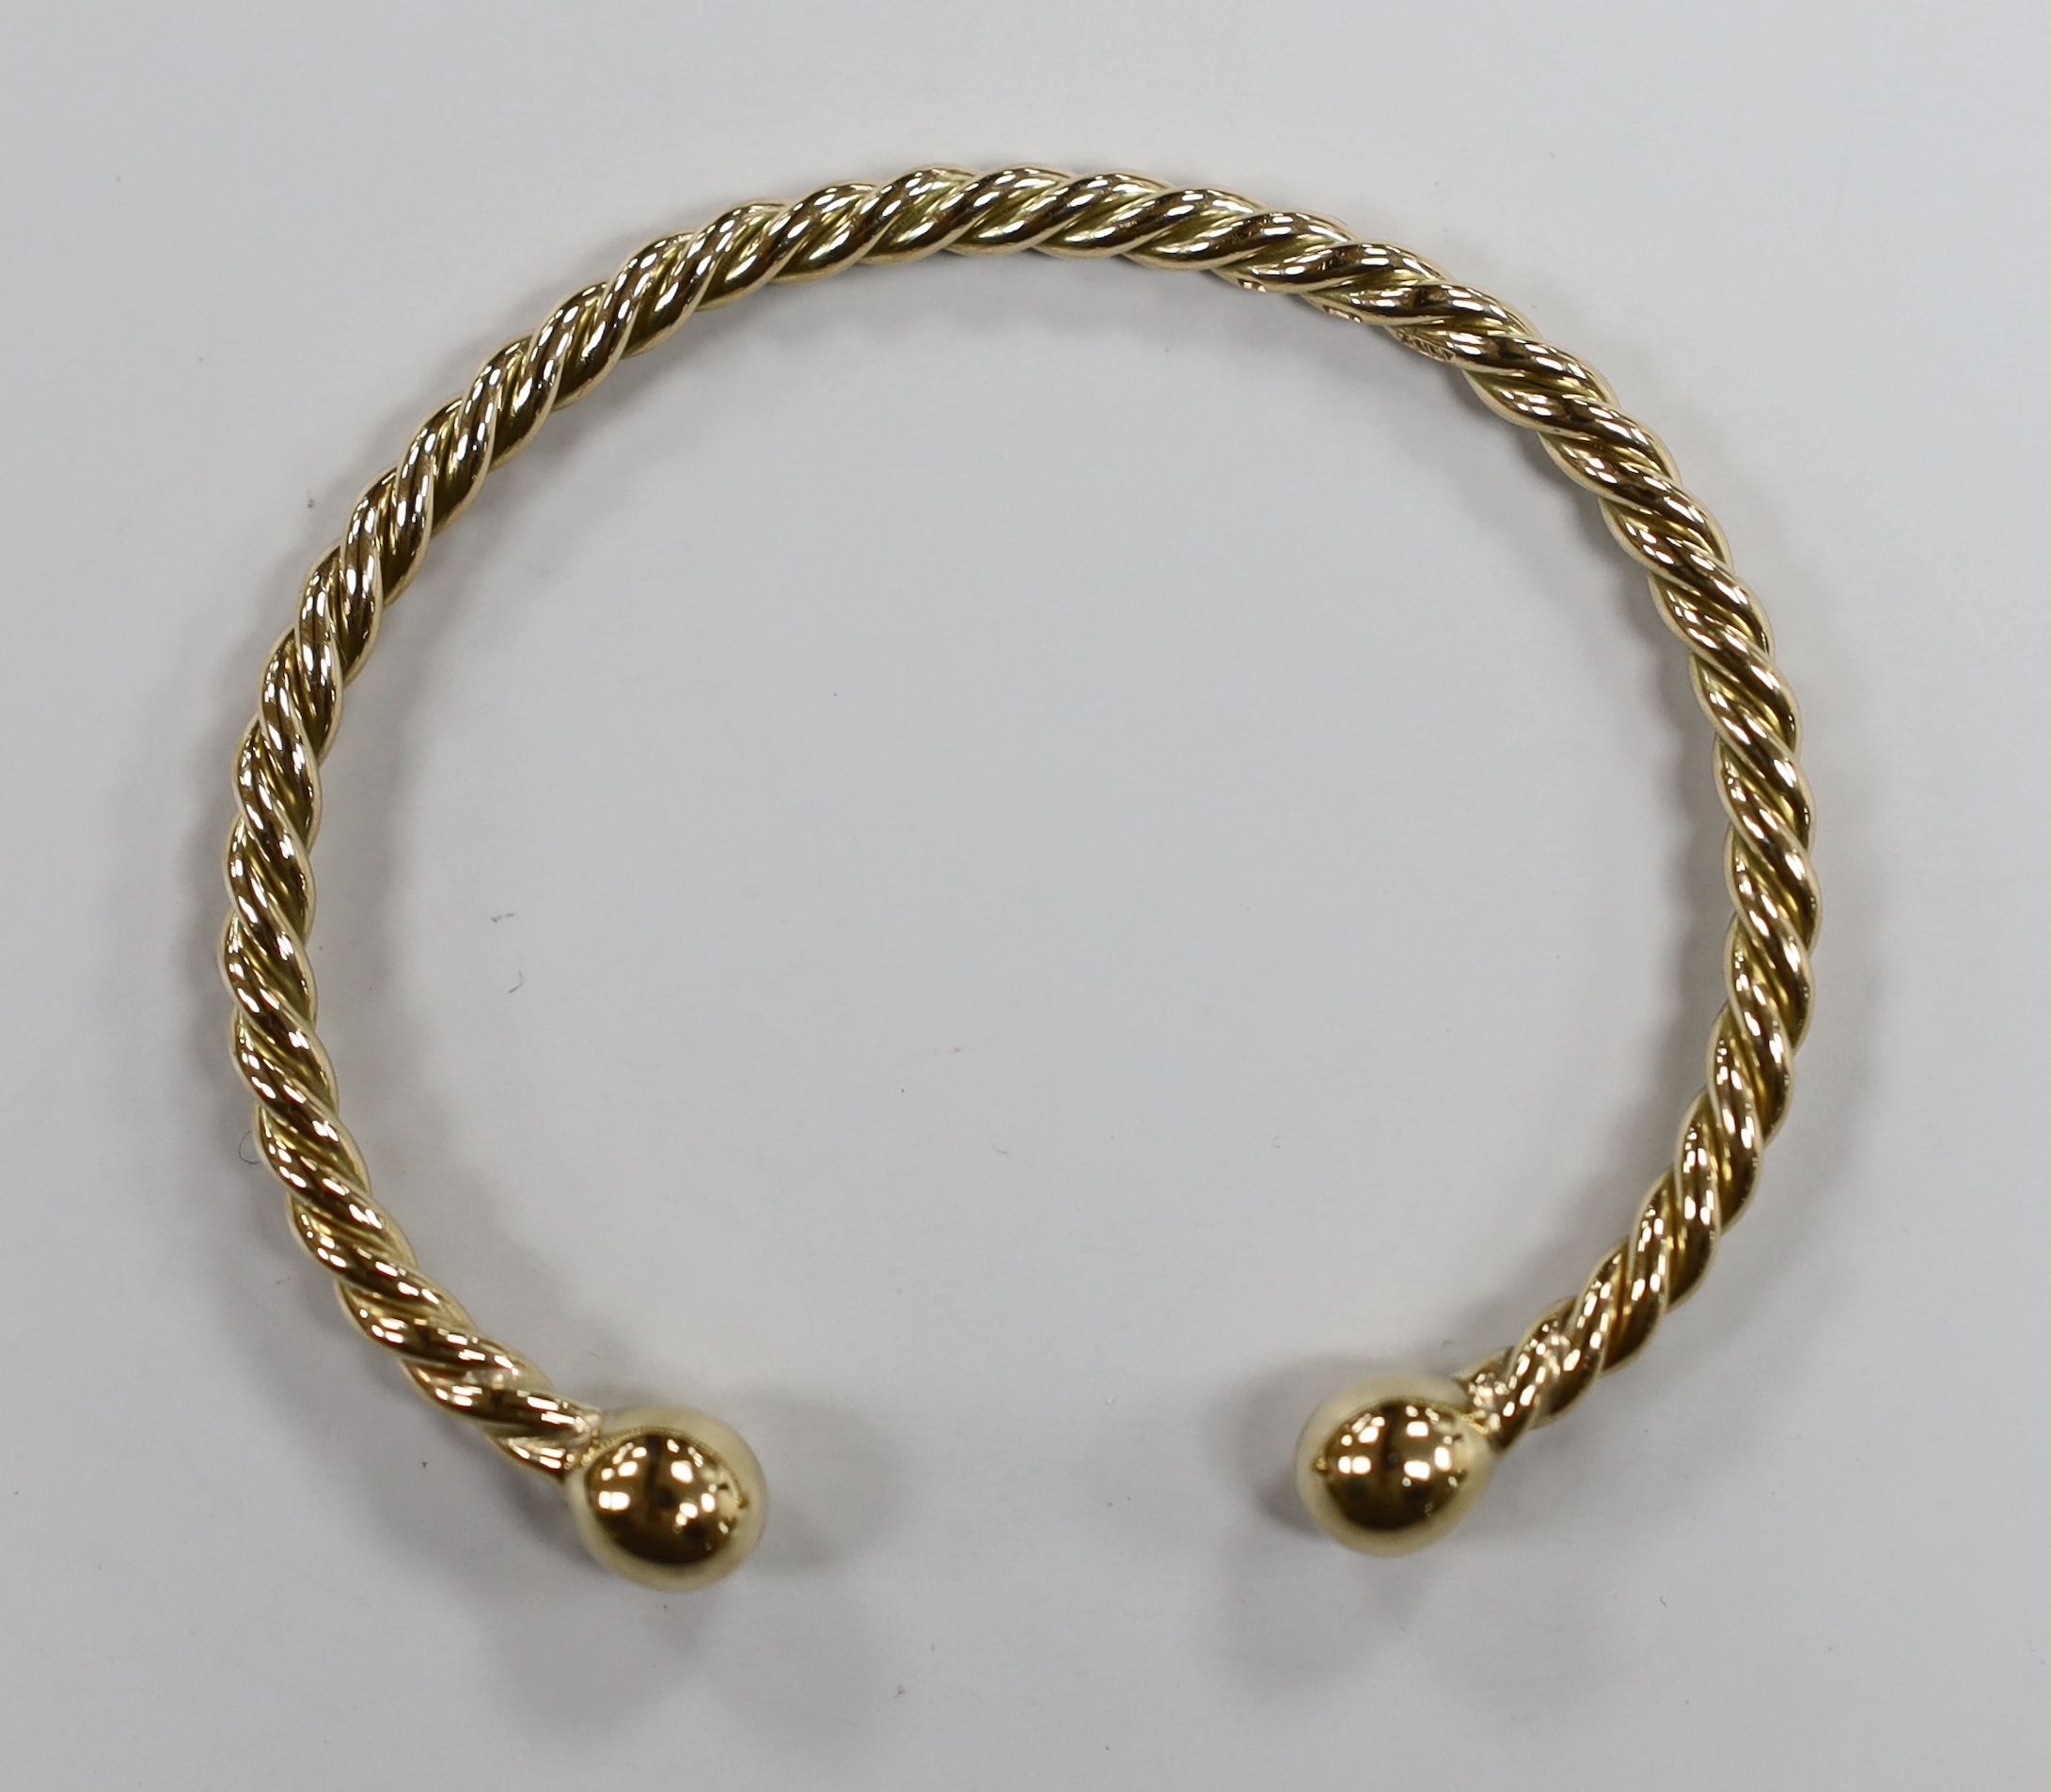 A modern 9ct gold rope twist bangle, 22.1 grams.